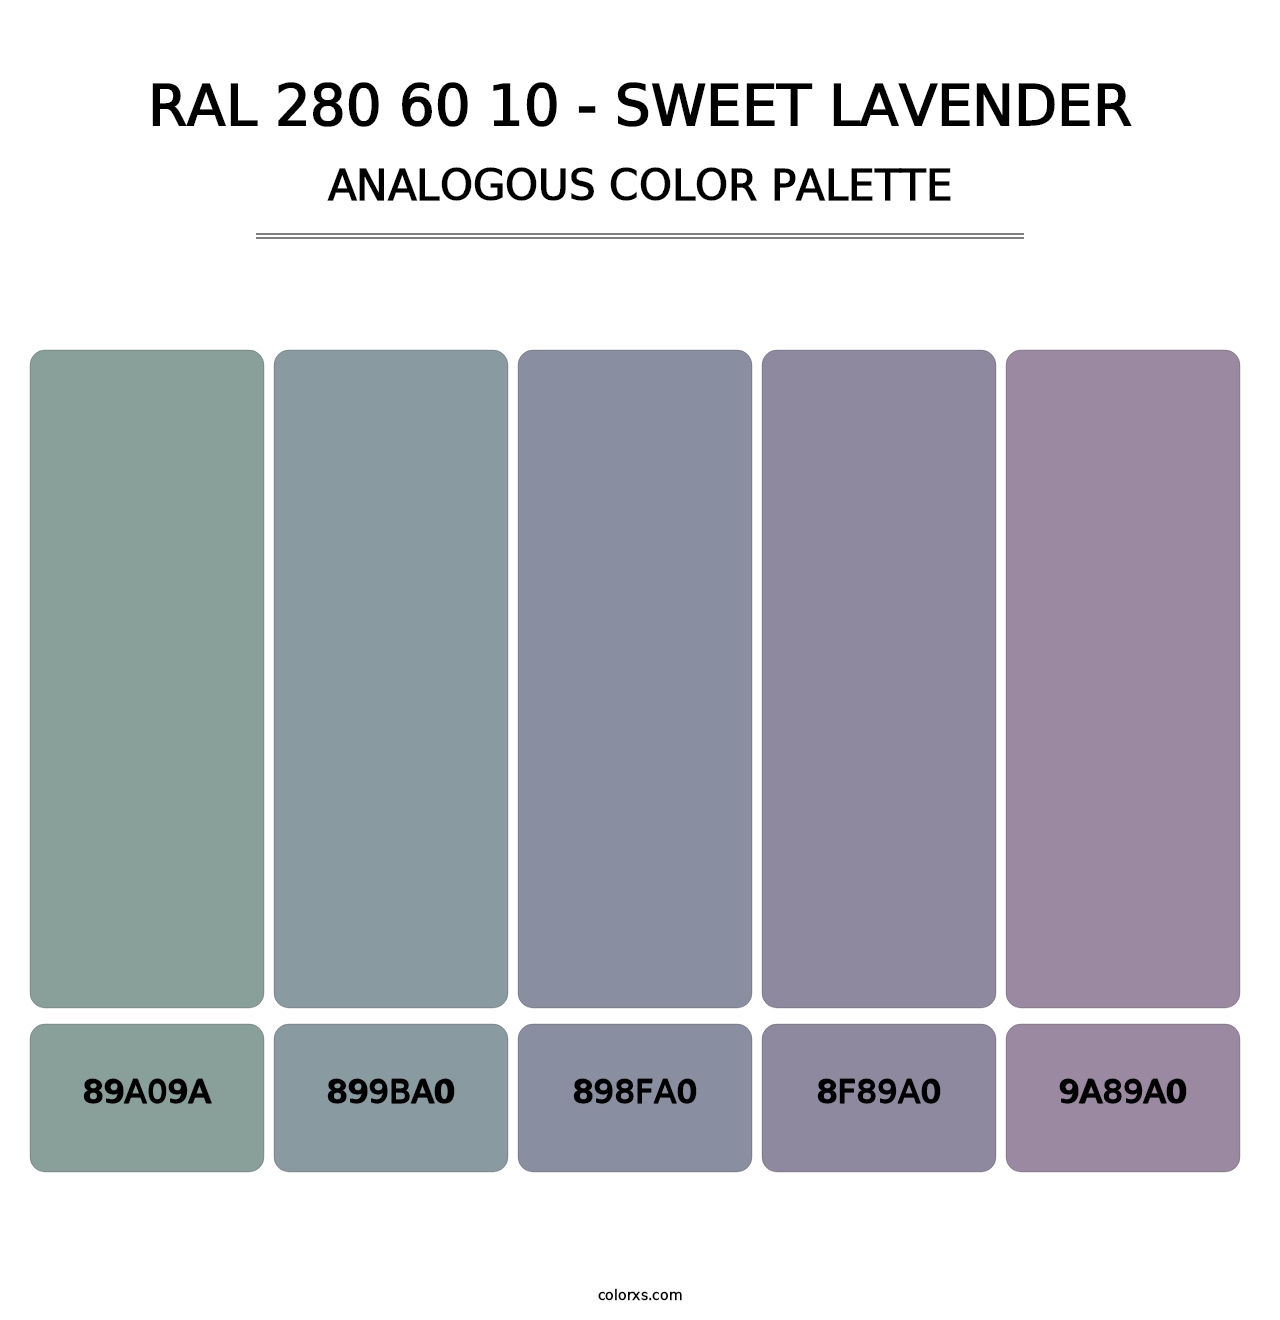 RAL 280 60 10 - Sweet Lavender - Analogous Color Palette